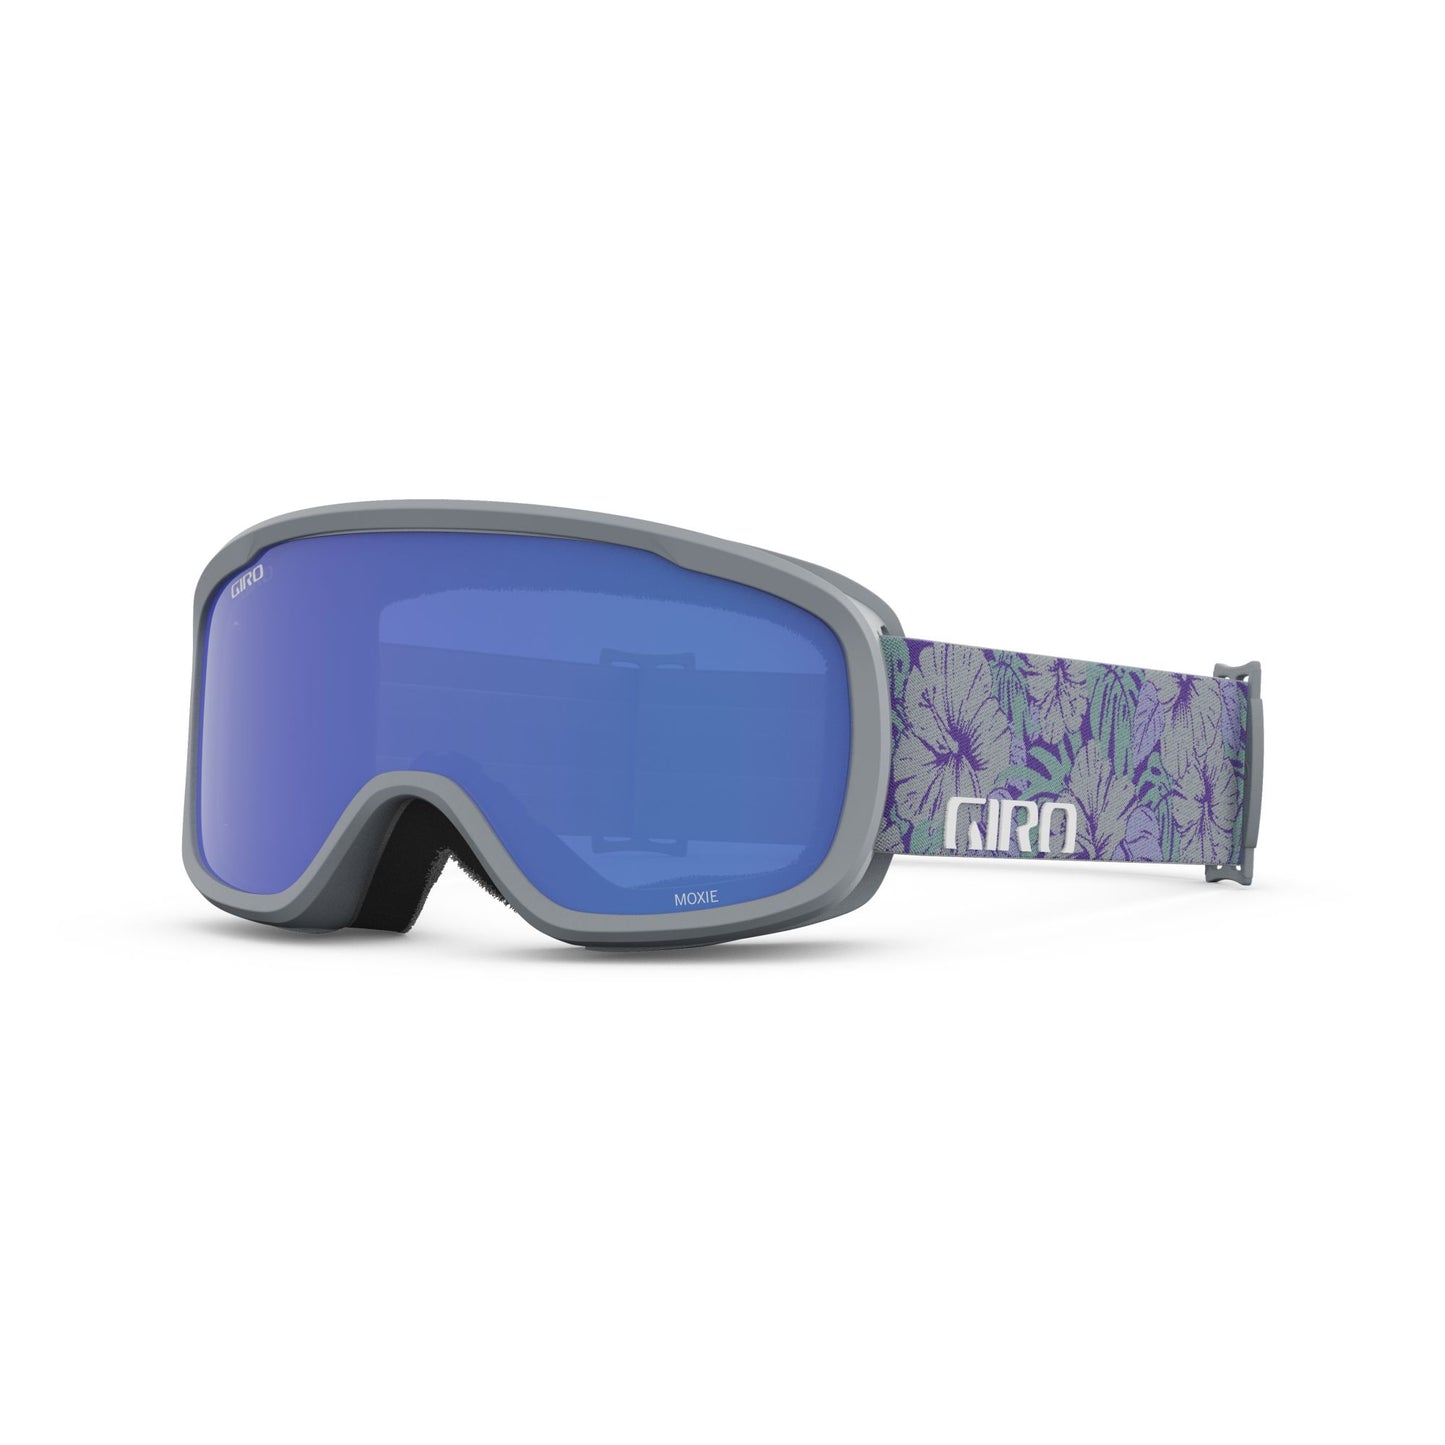 Giro Women's Moxie Snow Goggle - Openbox Grey Botanical Grey Cobalt - Giro Snow Snow Goggles